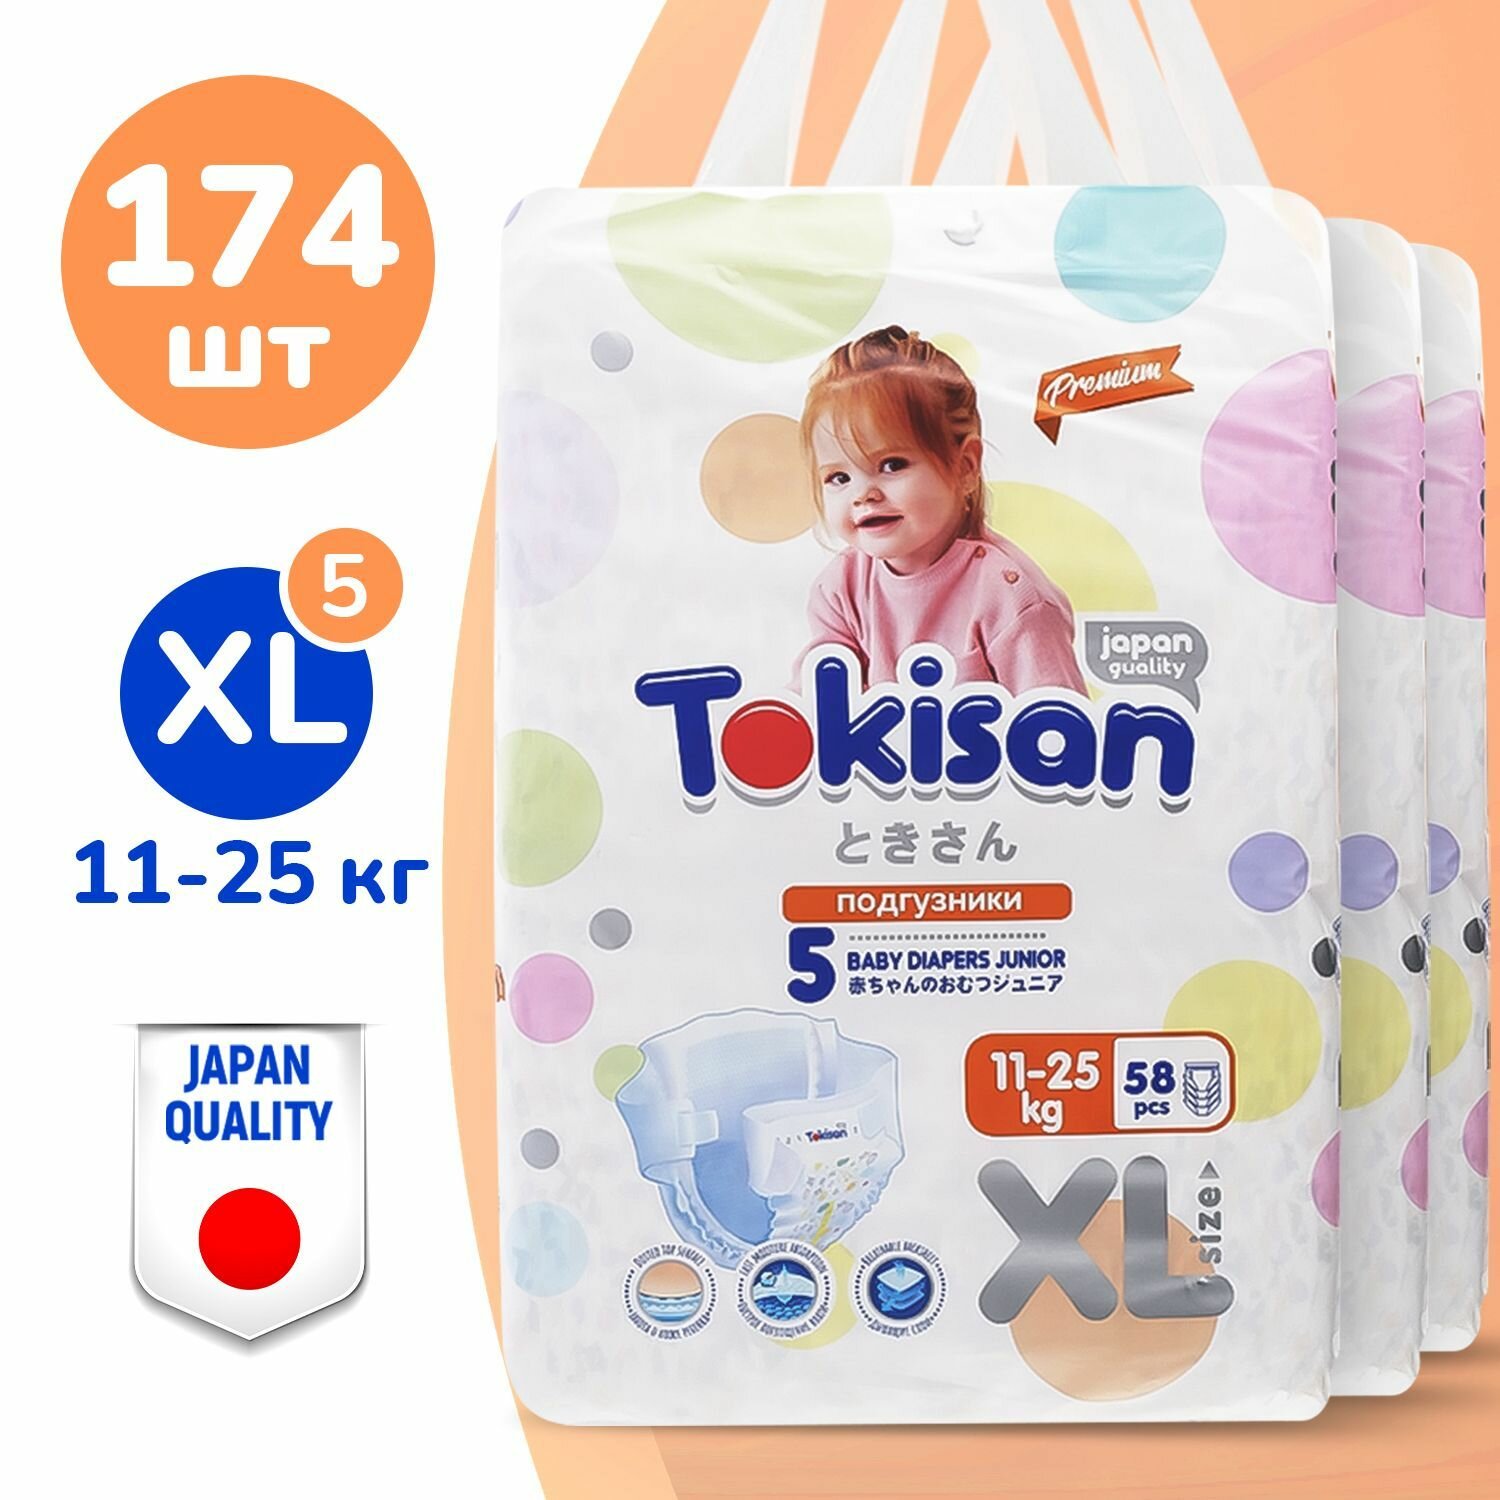 TOKISAN Подгузники трусики детские, 5 размер (11-25 кг) XL, 174 шт